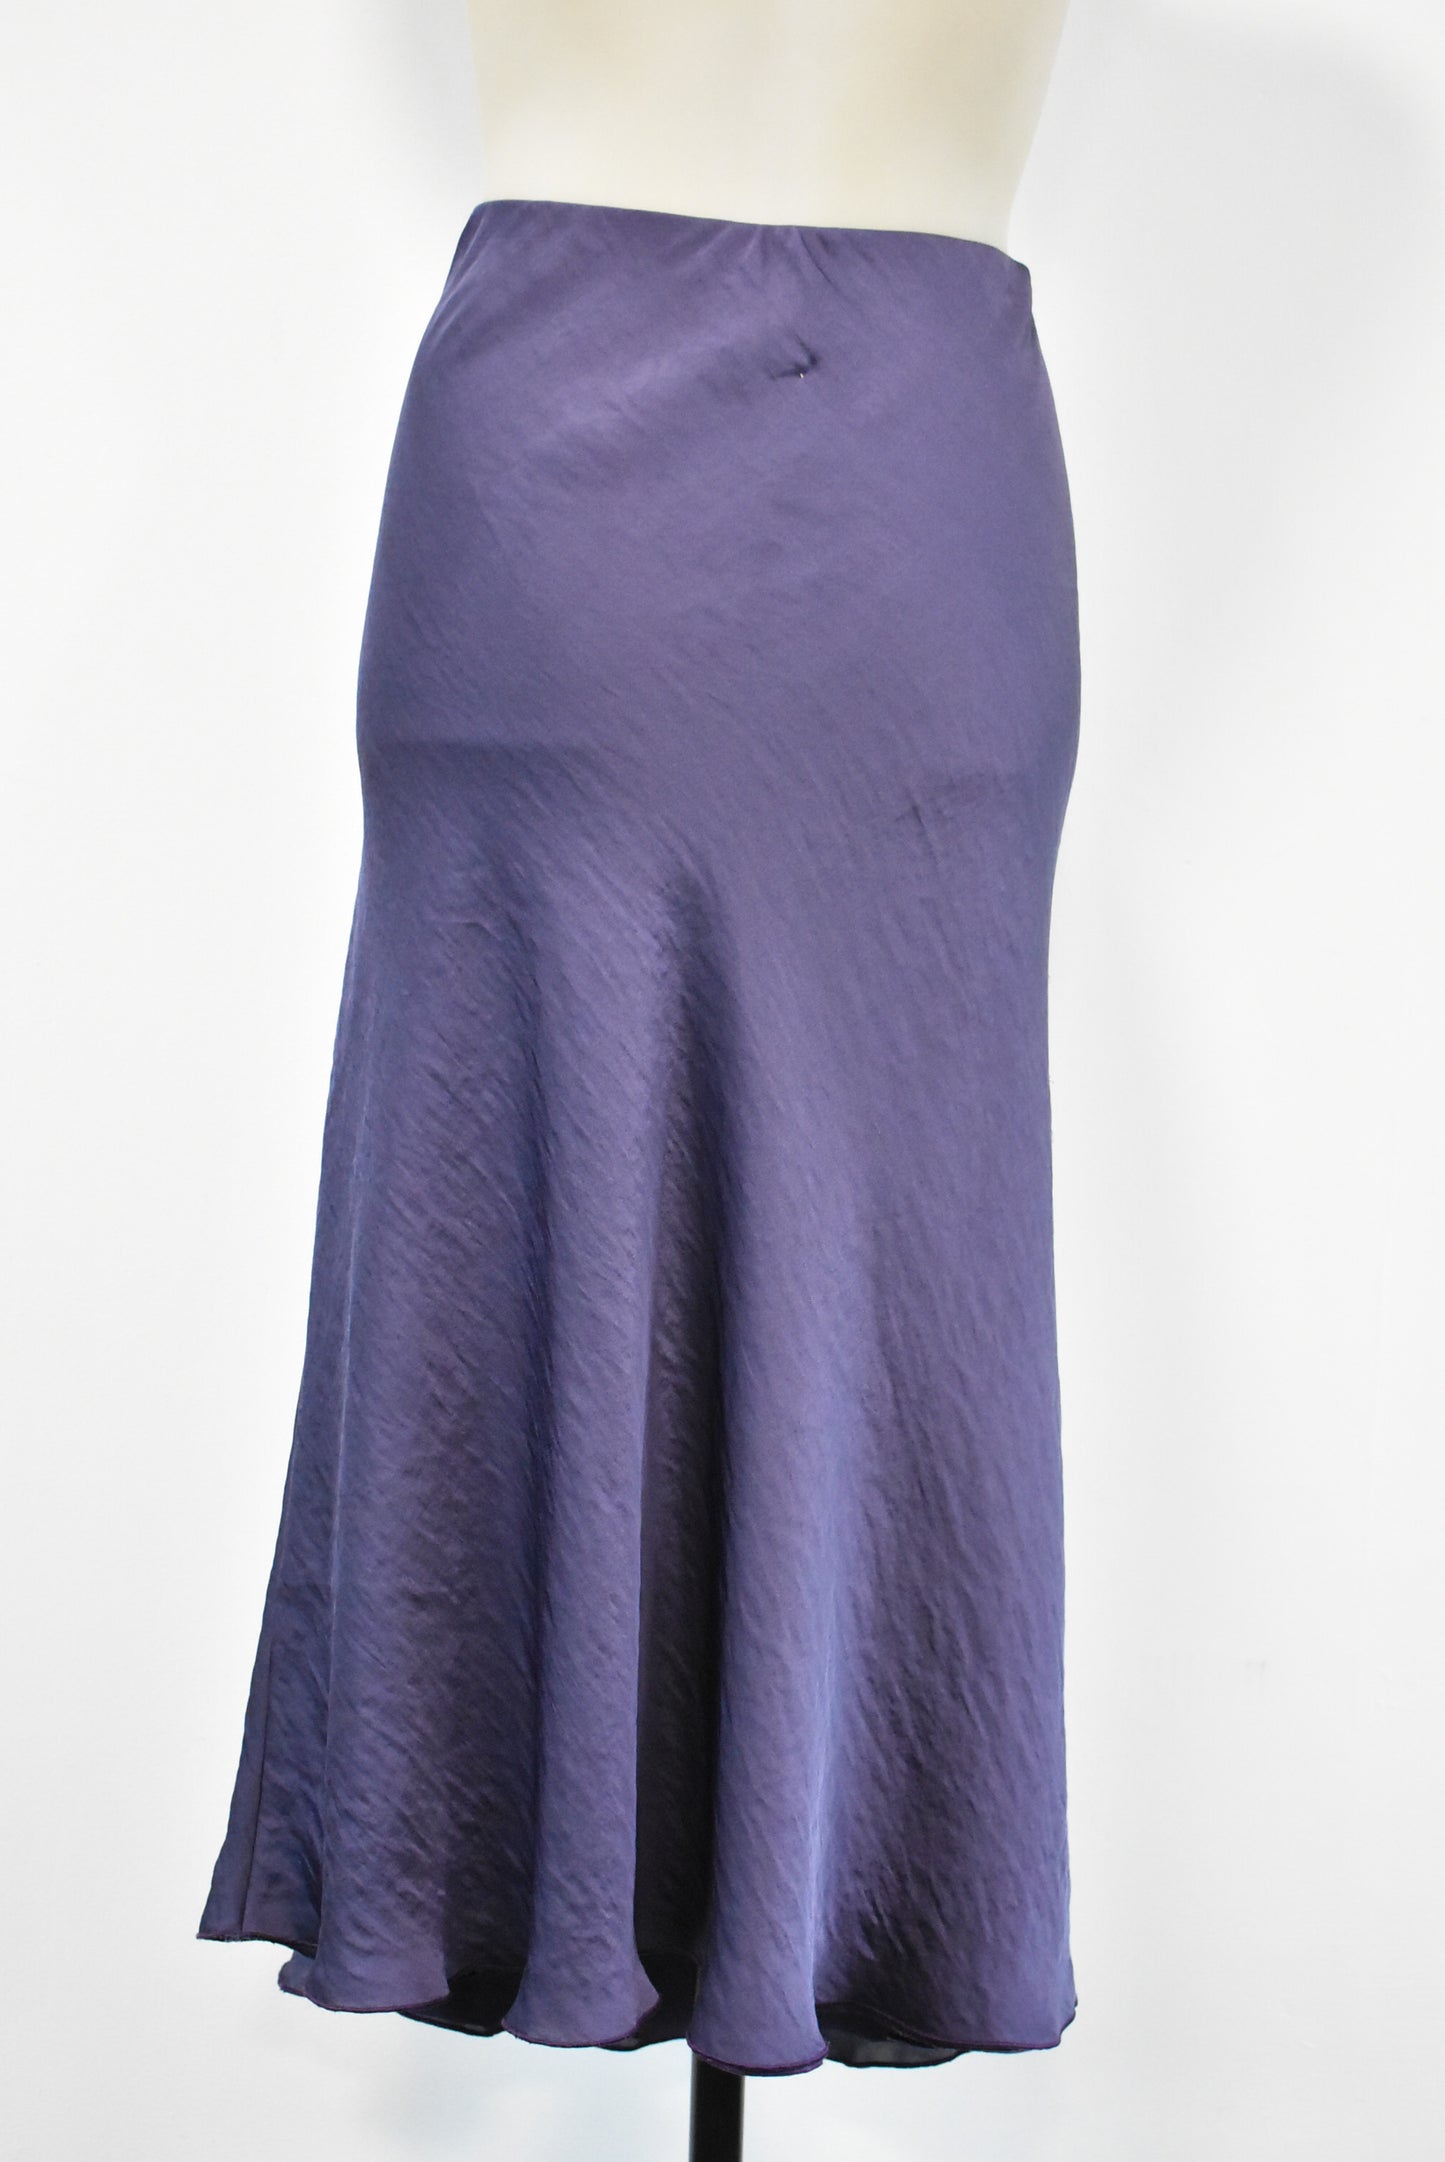 Tf deep purple skirt, 18